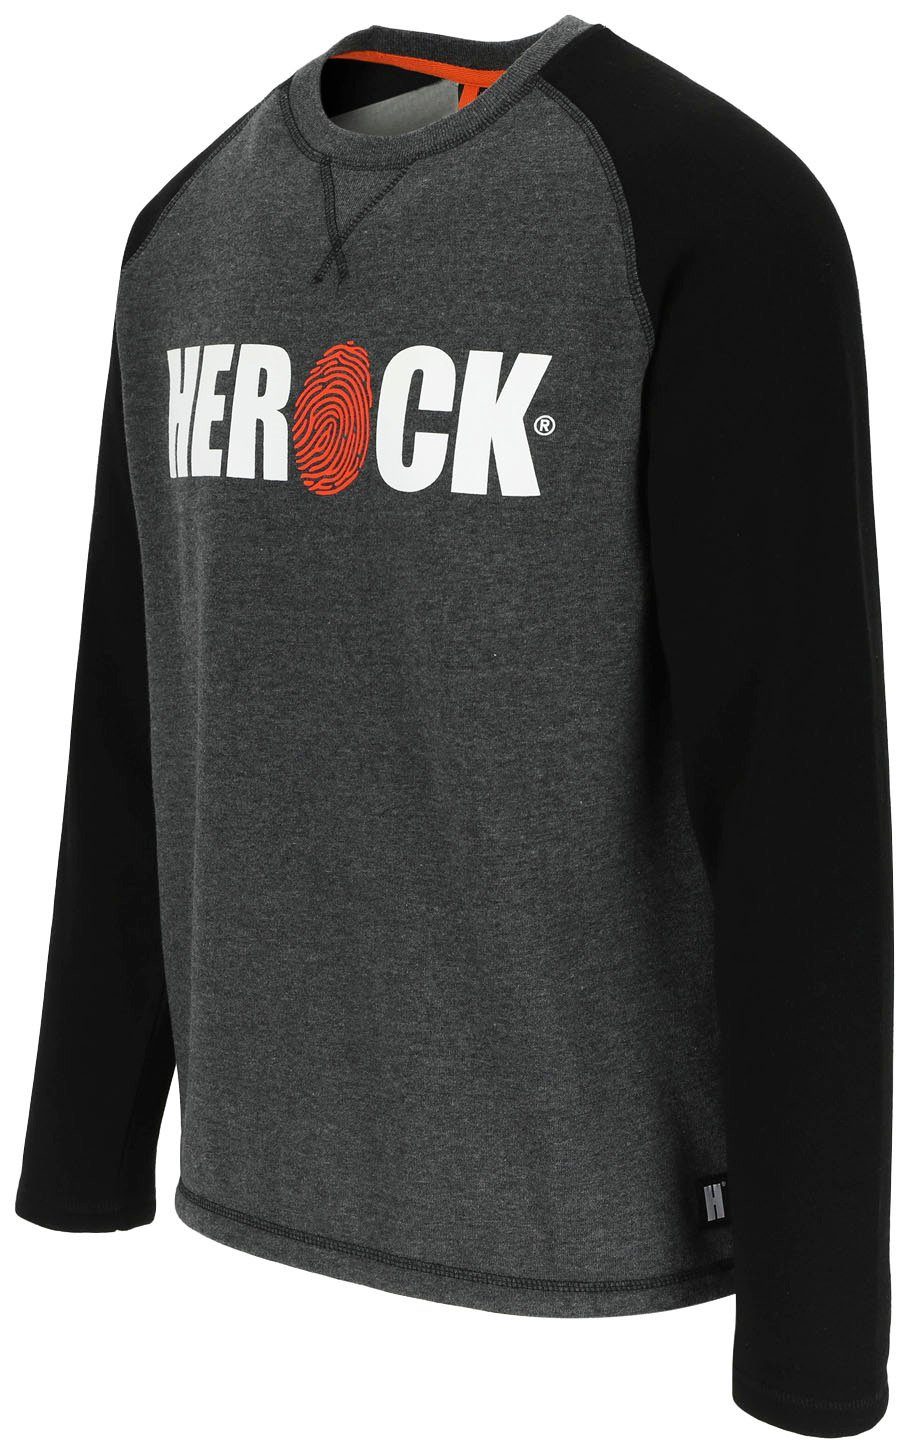 2-Farbig Schwarz/Grau Sweater Herock Herock®- Aufdruck, mit T-Shirt/Sweater, Langarmshirt ROLES Rundhals,